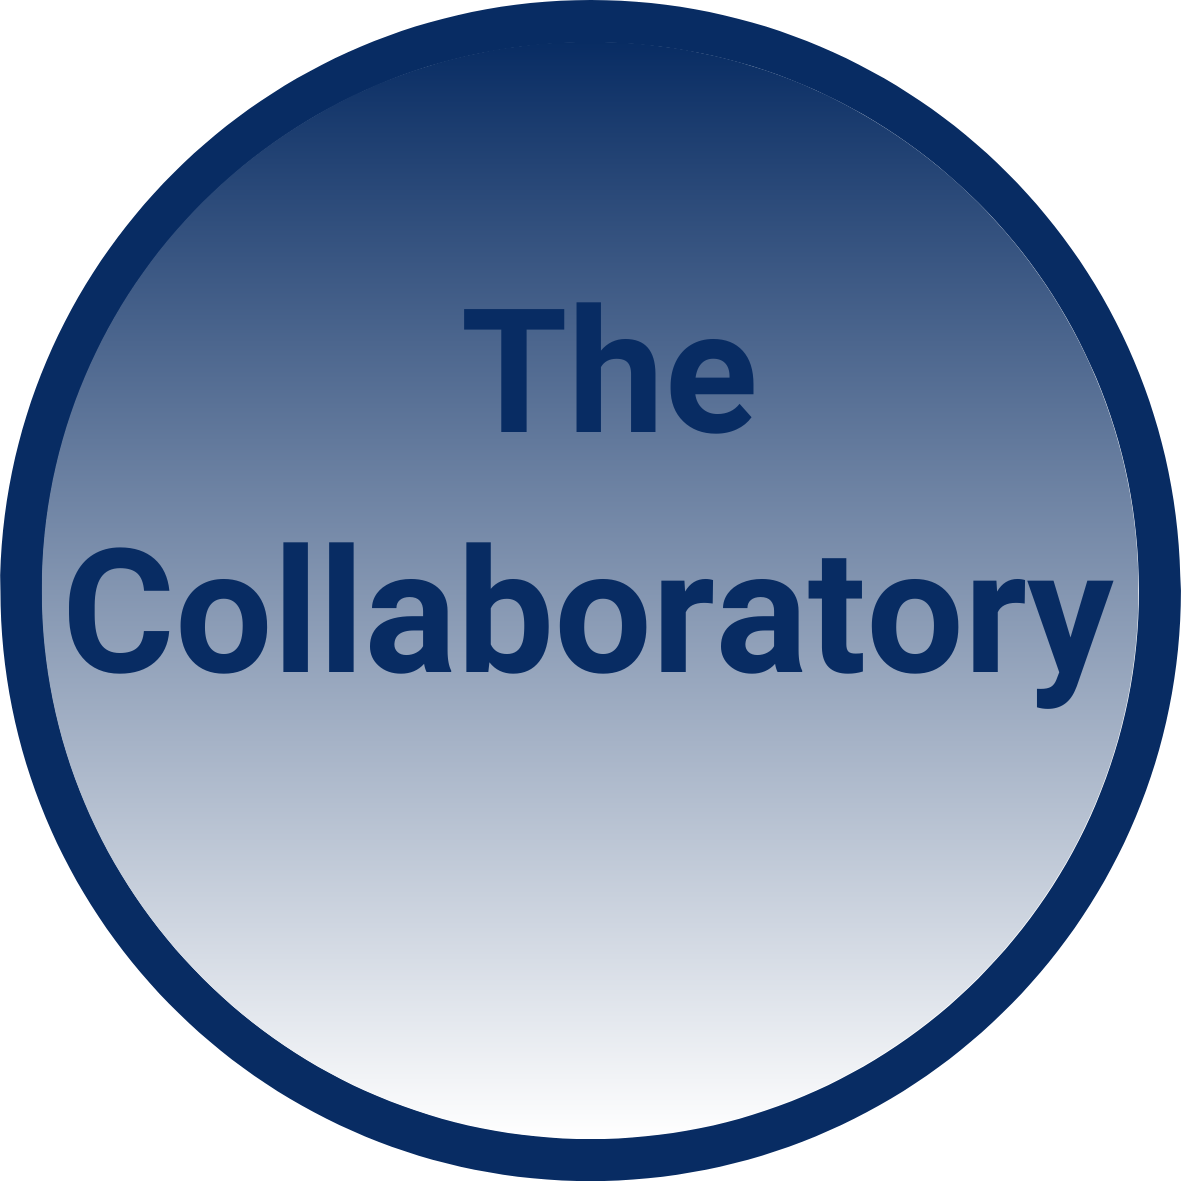 The Collaboratory